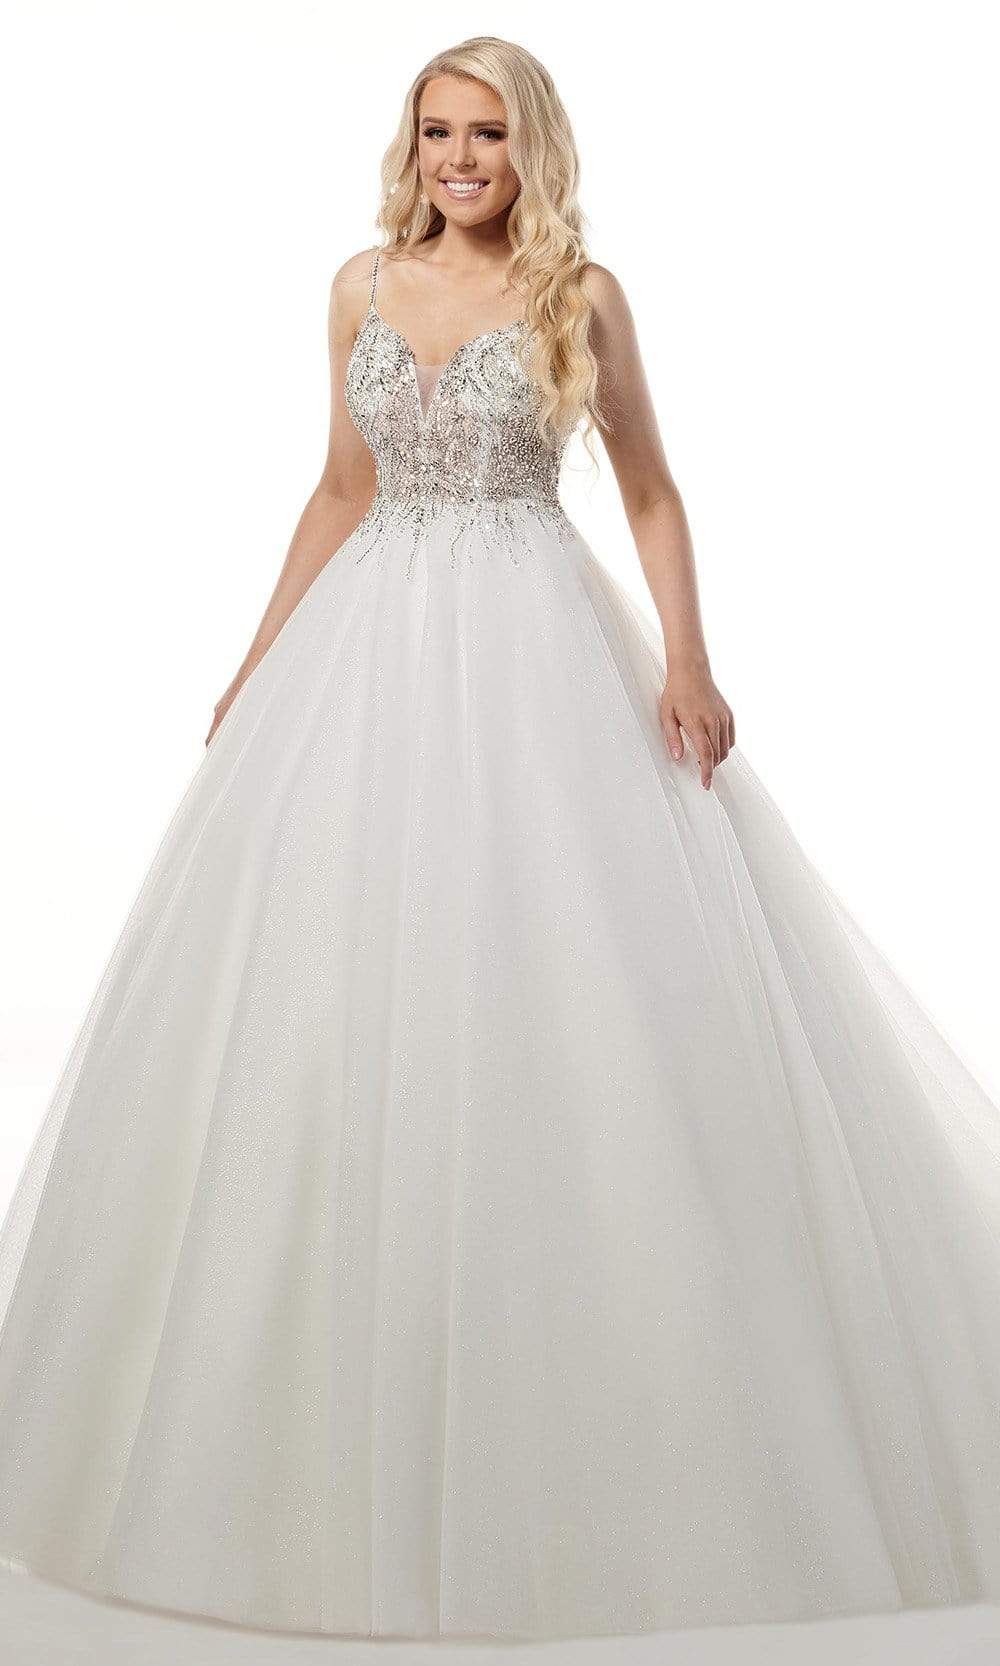 Rachel Allan - M780 Fully Beaded Bodice Tulle Ballgown Wedding Dress
